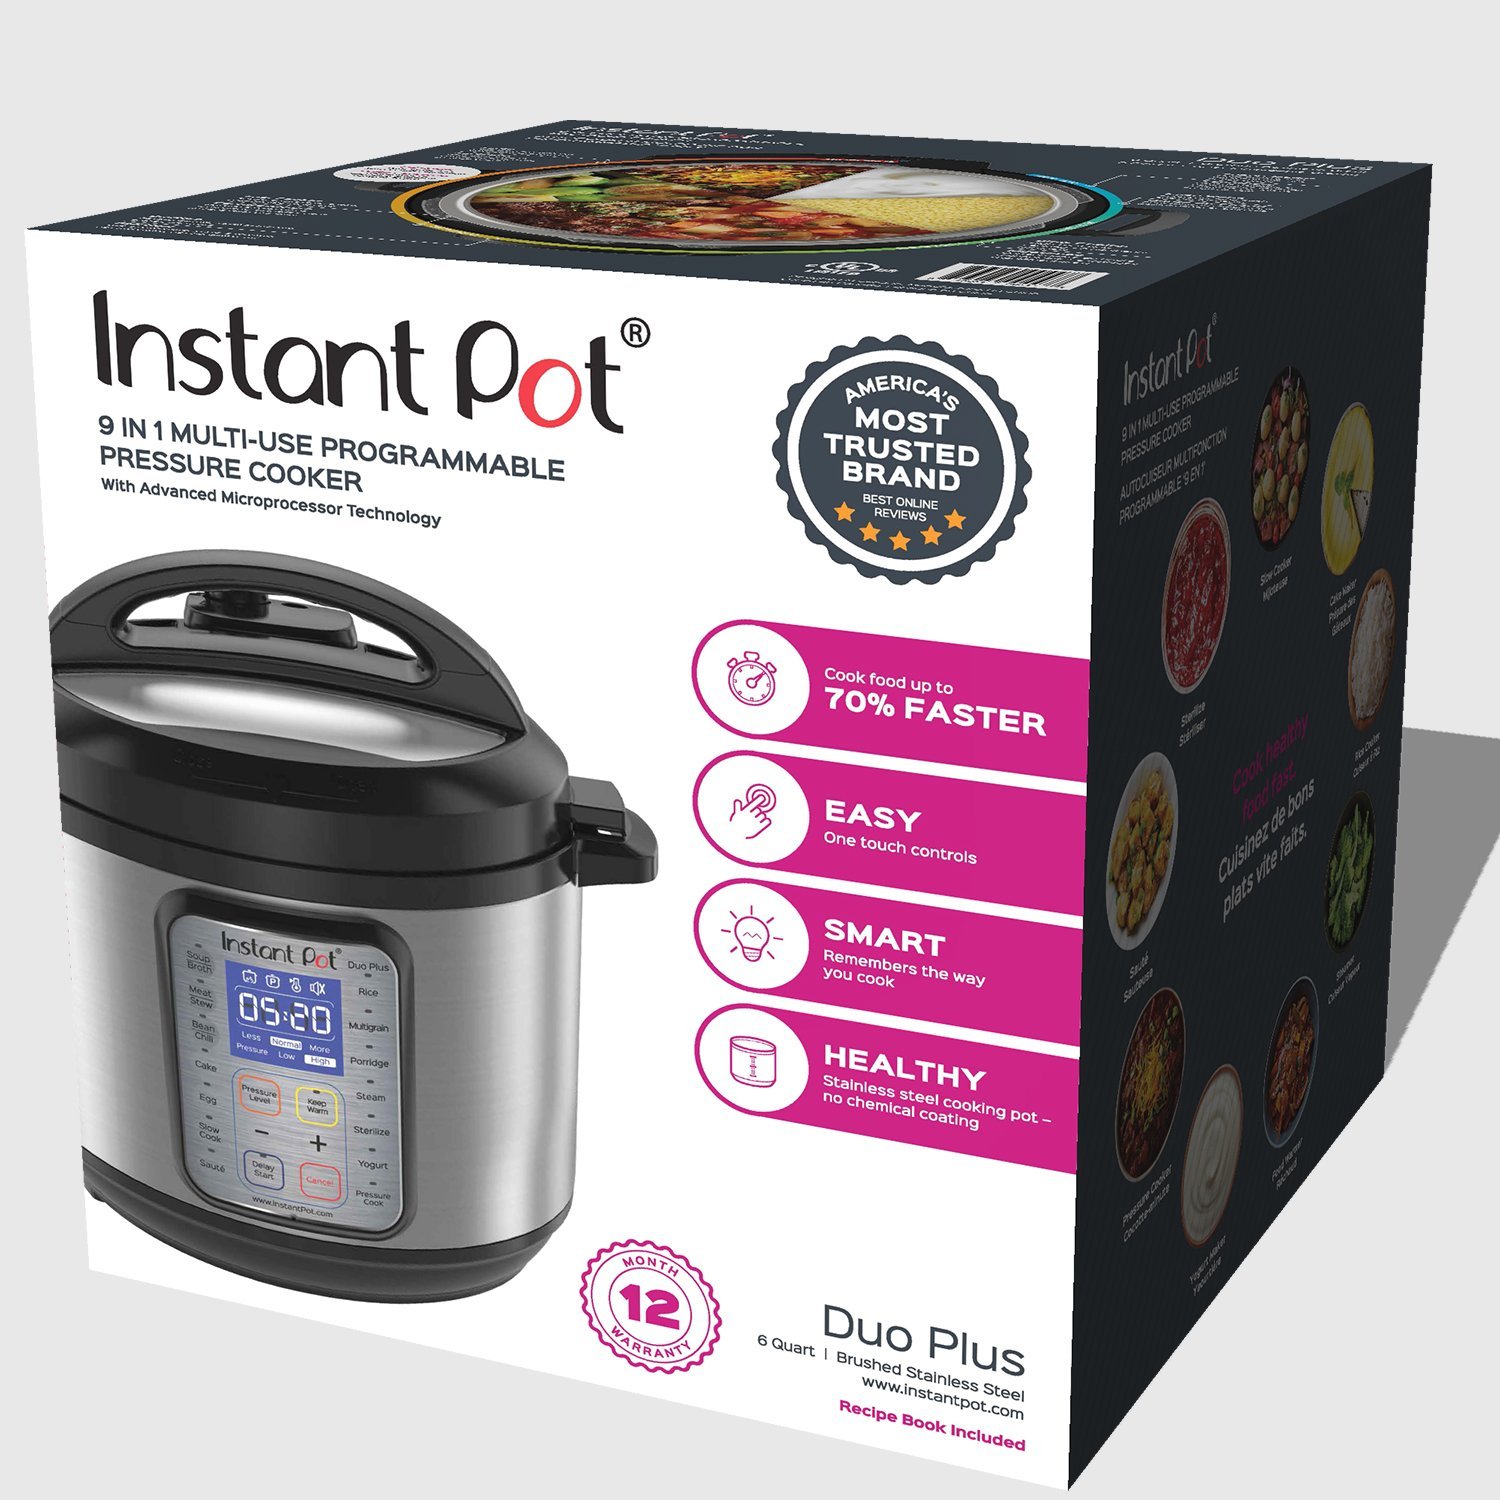 Instant Pot DUO Plus 6-Qt 9-in-1 Multi- Use Cooker $74.95 (reg. $119.95) 